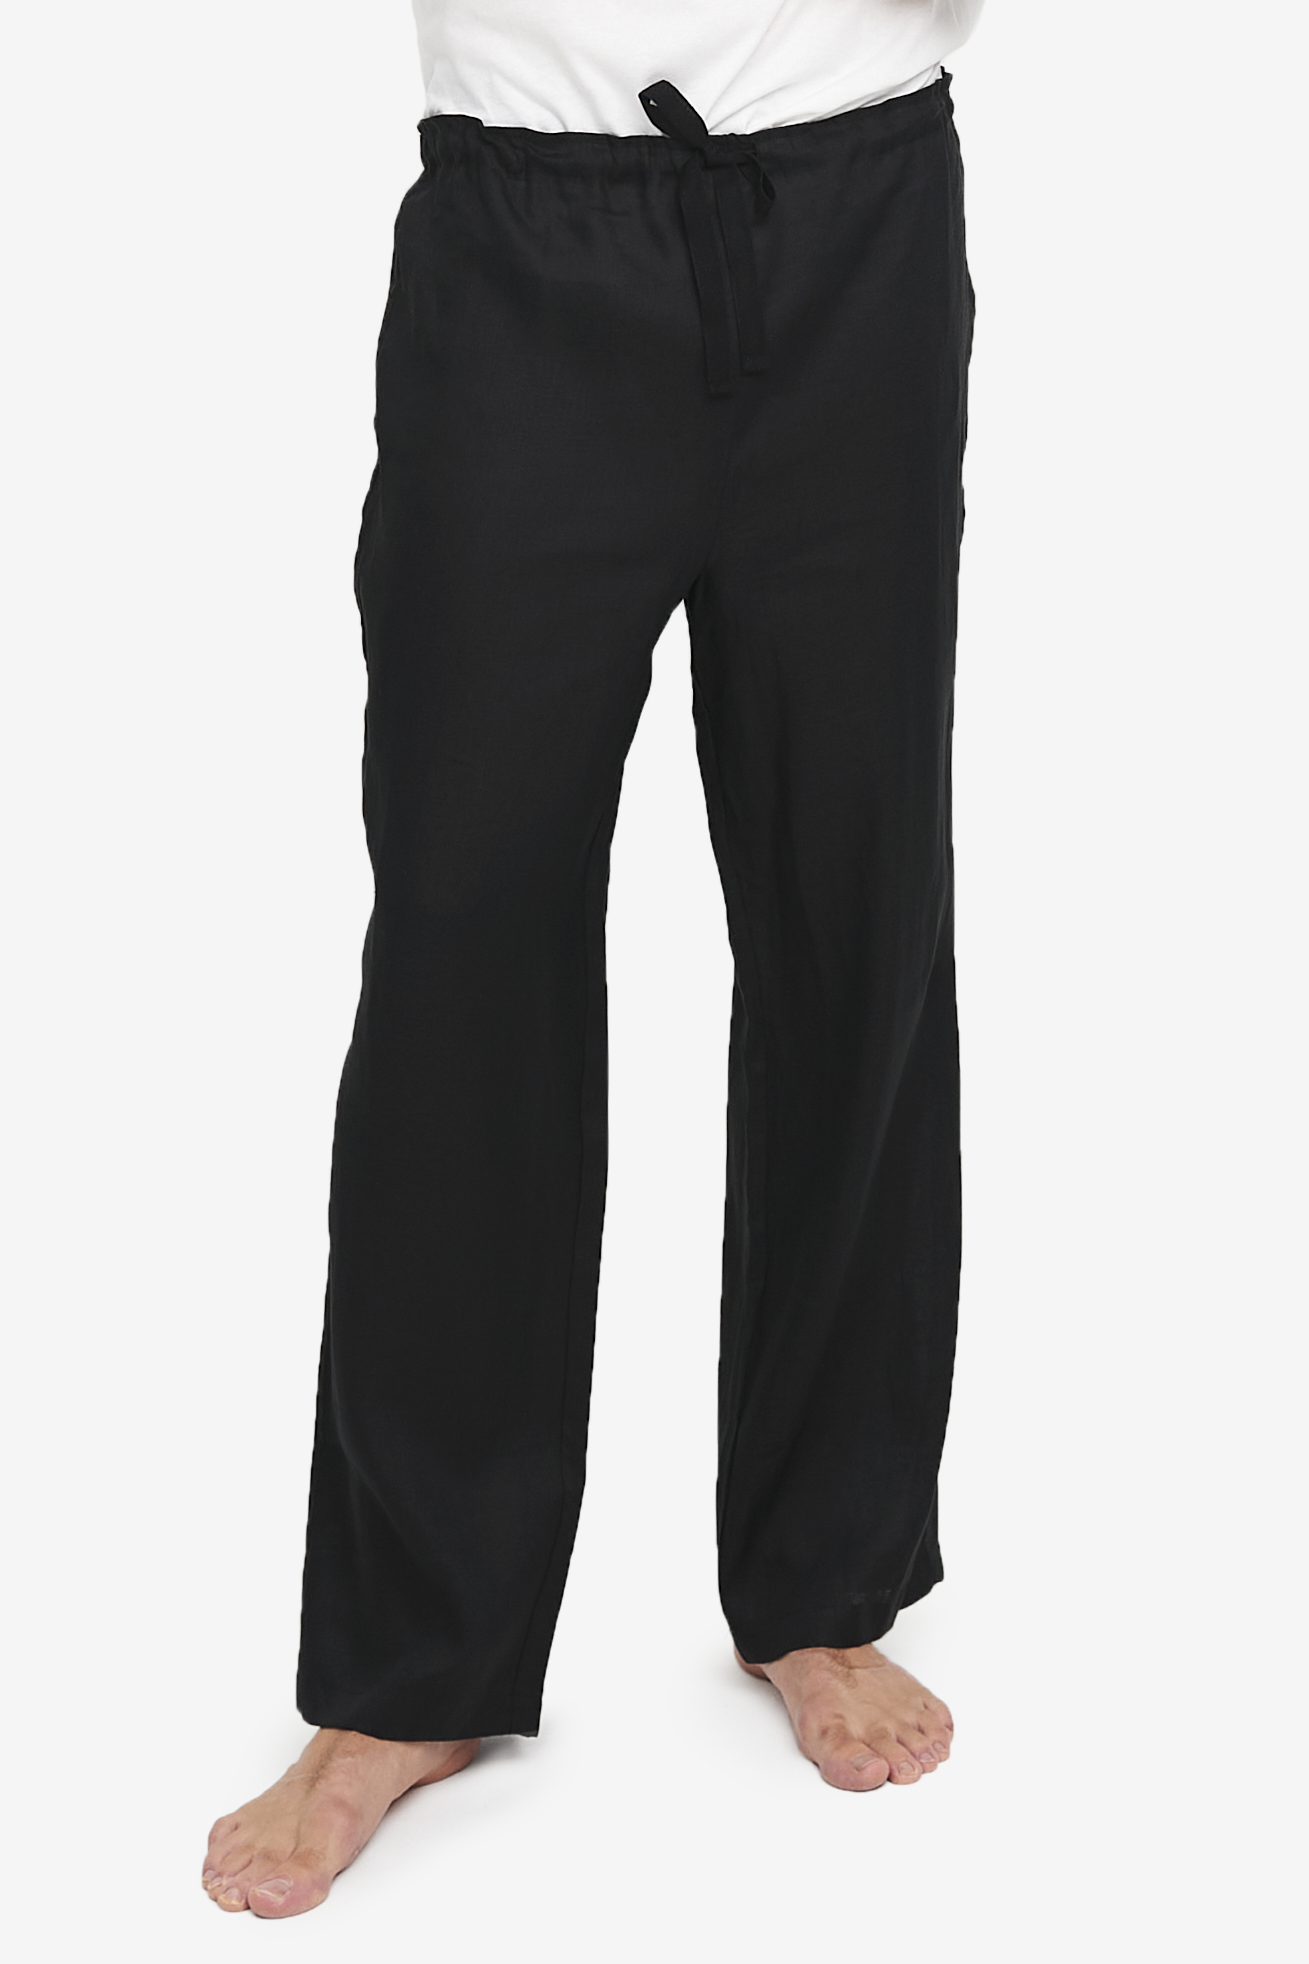 Men's pyjama pant in black linen. Drawstring and elastic waist, wide leg.